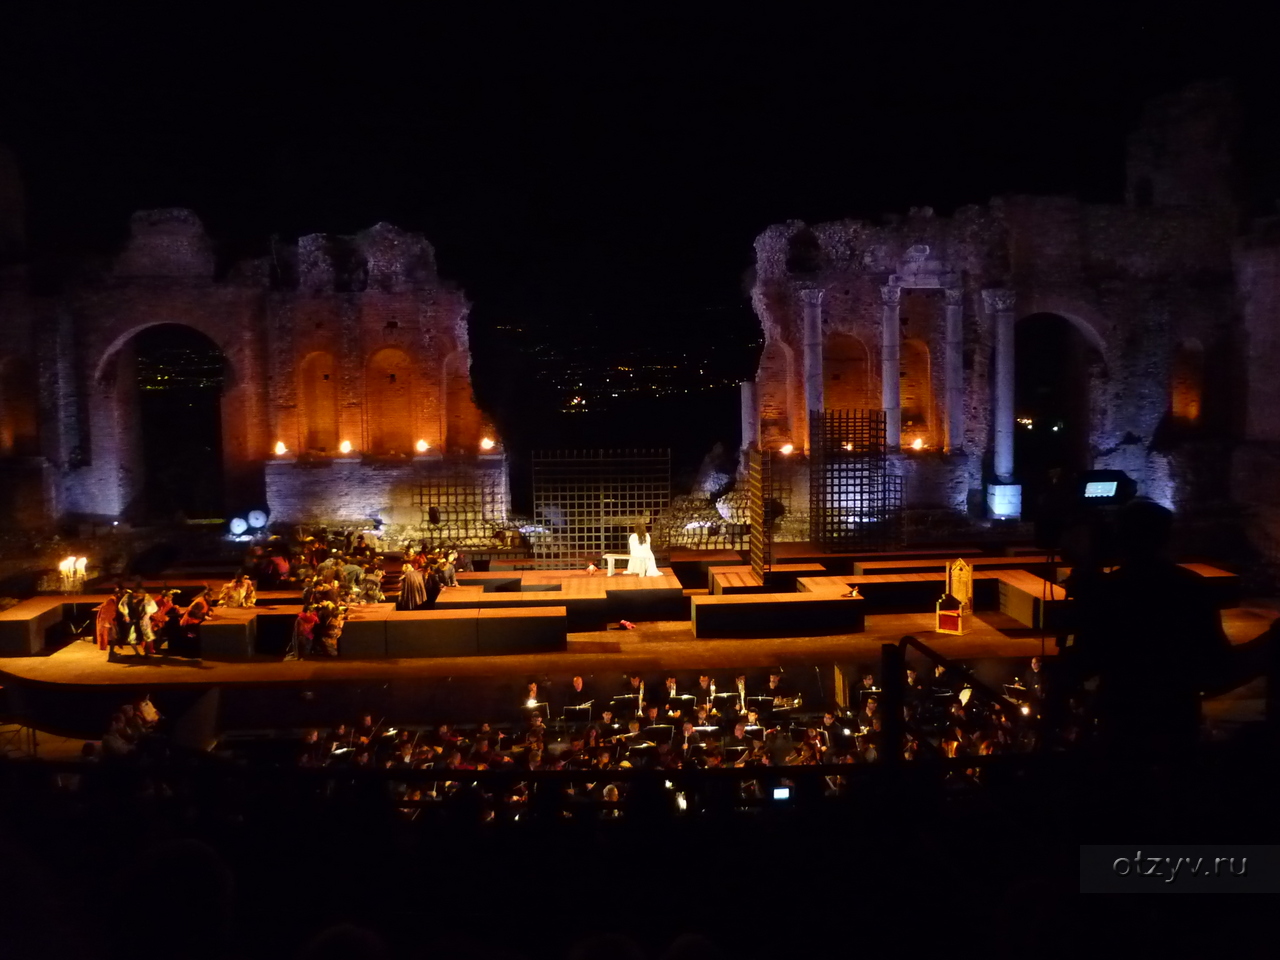 Theatre evening. Амфитеатр Таормина. Театр в Таормине Сицилия. Колизей Таормина Сицилия. Концерты Таормина Италия.